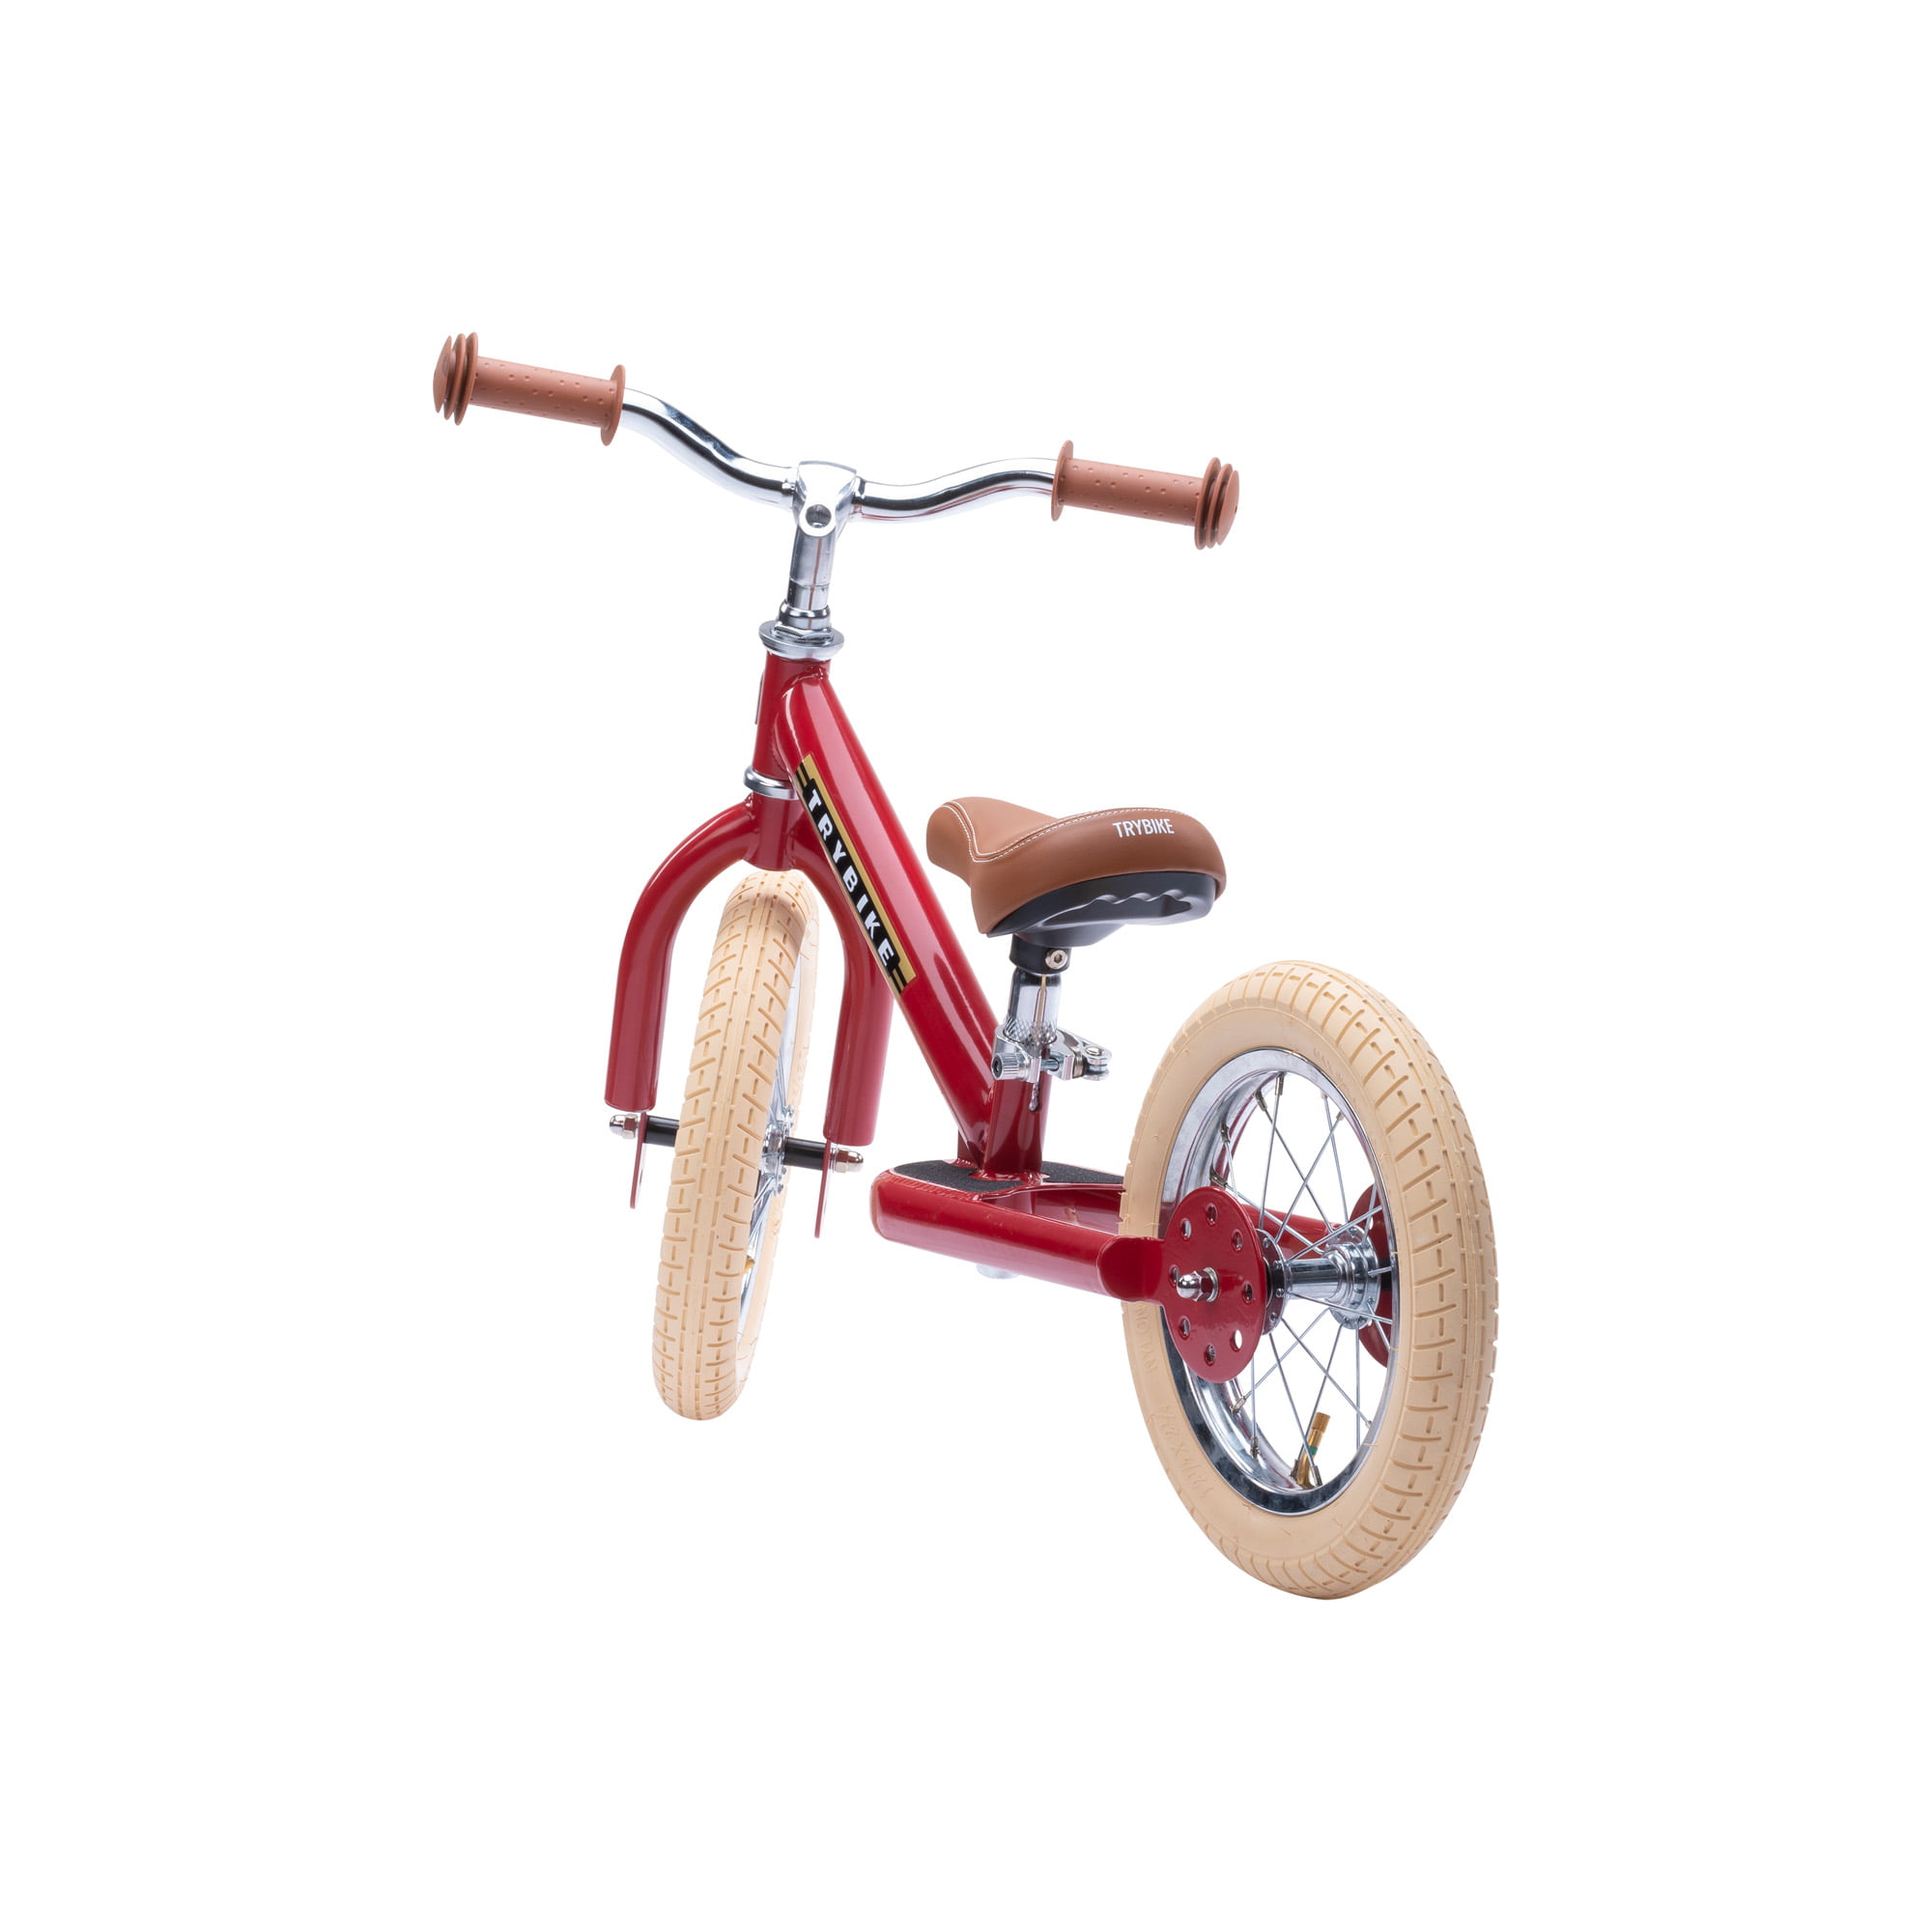 Trybike steel balance bike - Red